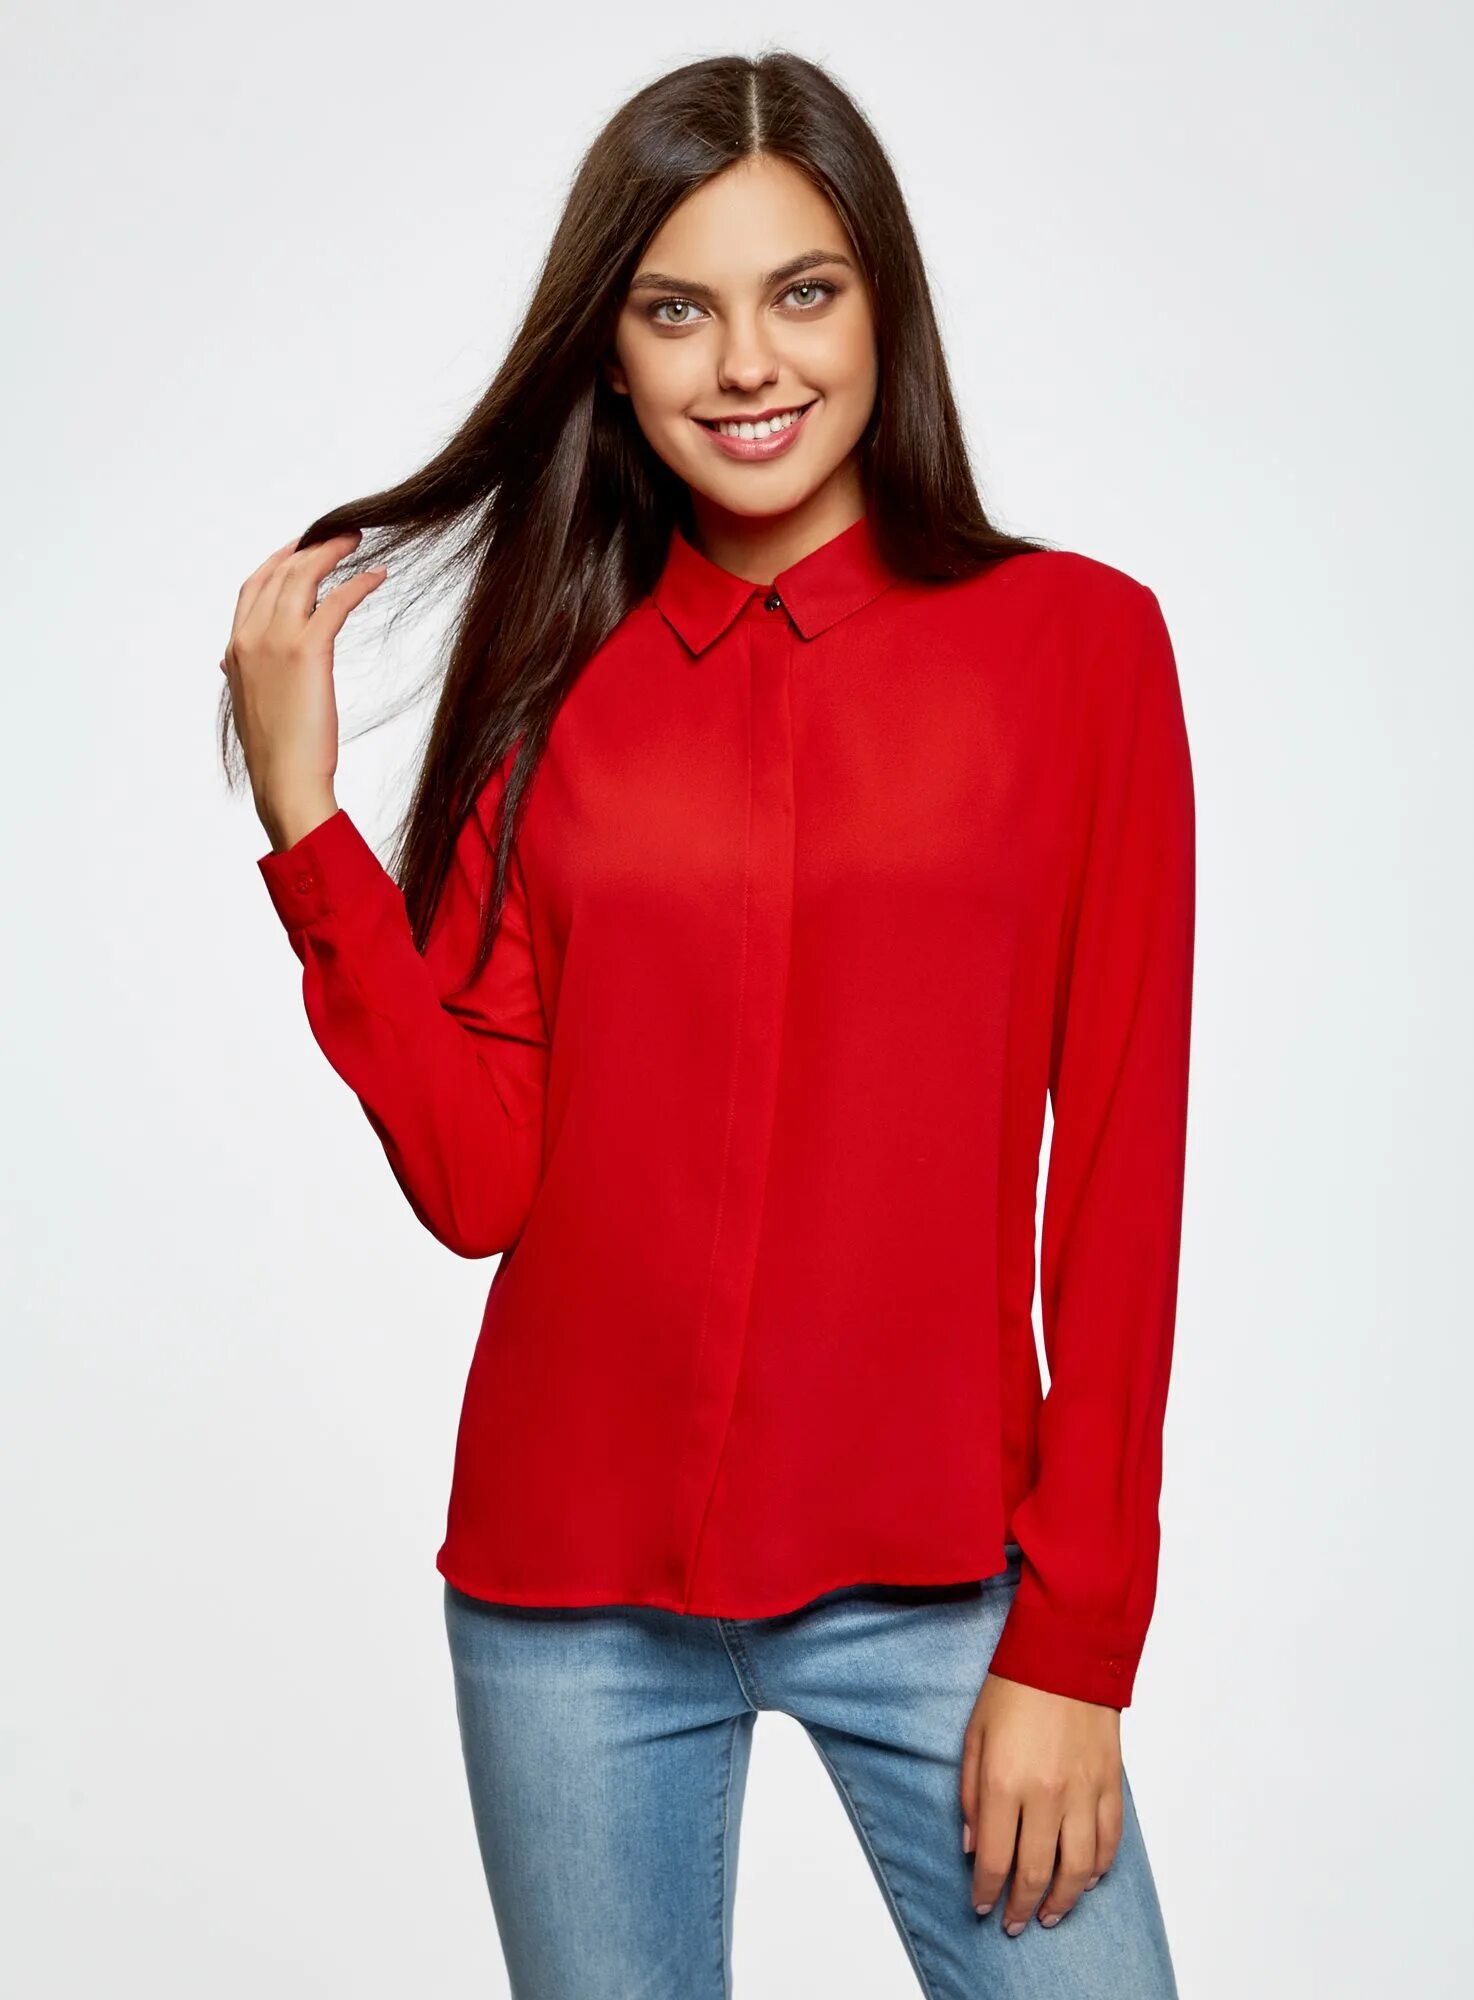 Oodji блузка красная. Красная блуза. Красная кофта. Красная кофта женская. Купить красную кофту